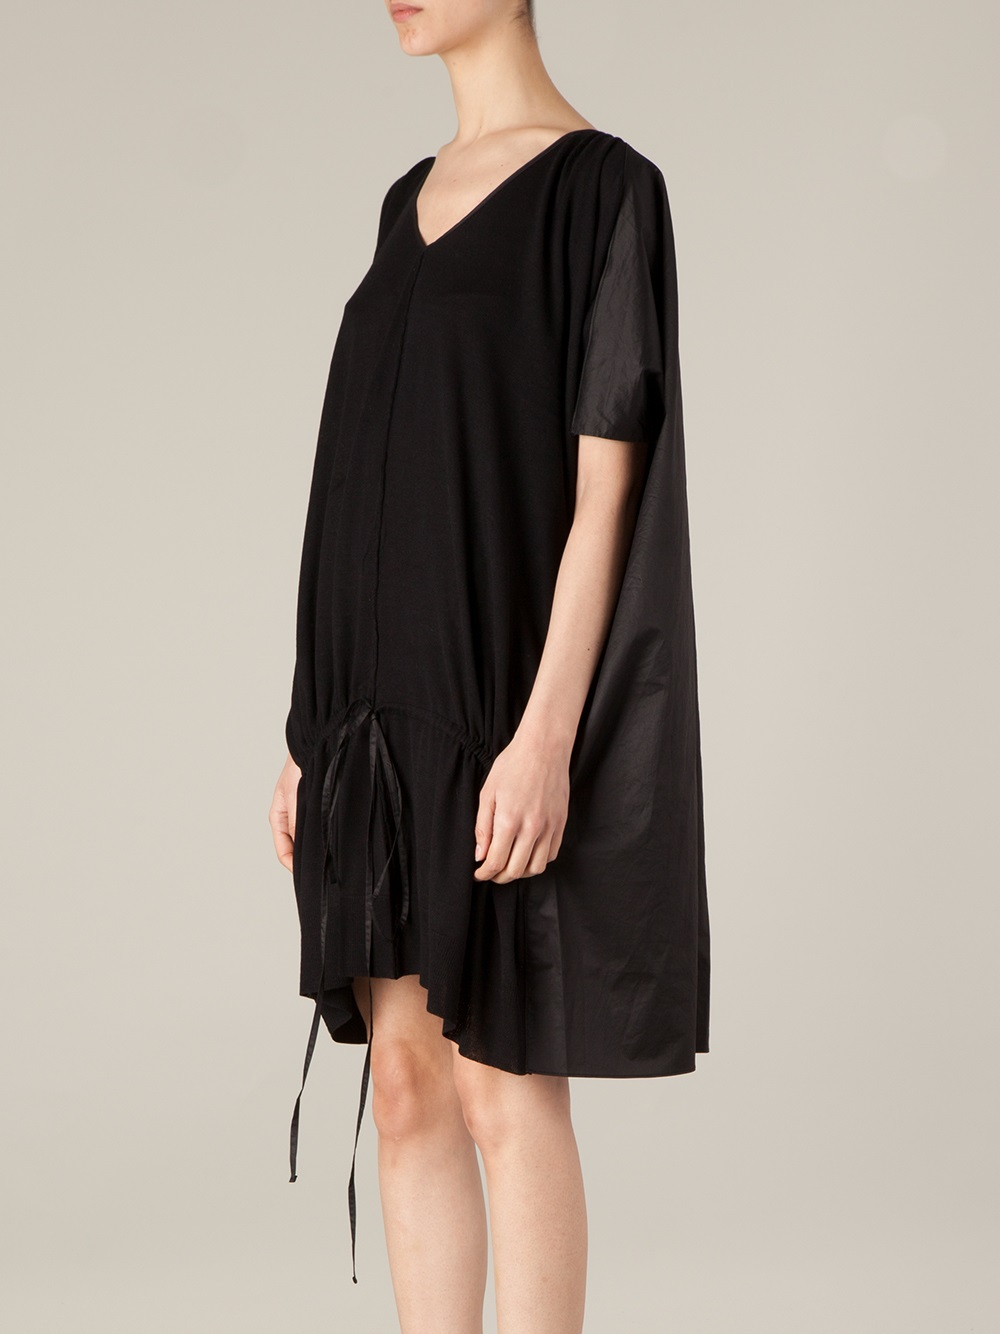 Lyst - Uma Wang Sack Dress in Black